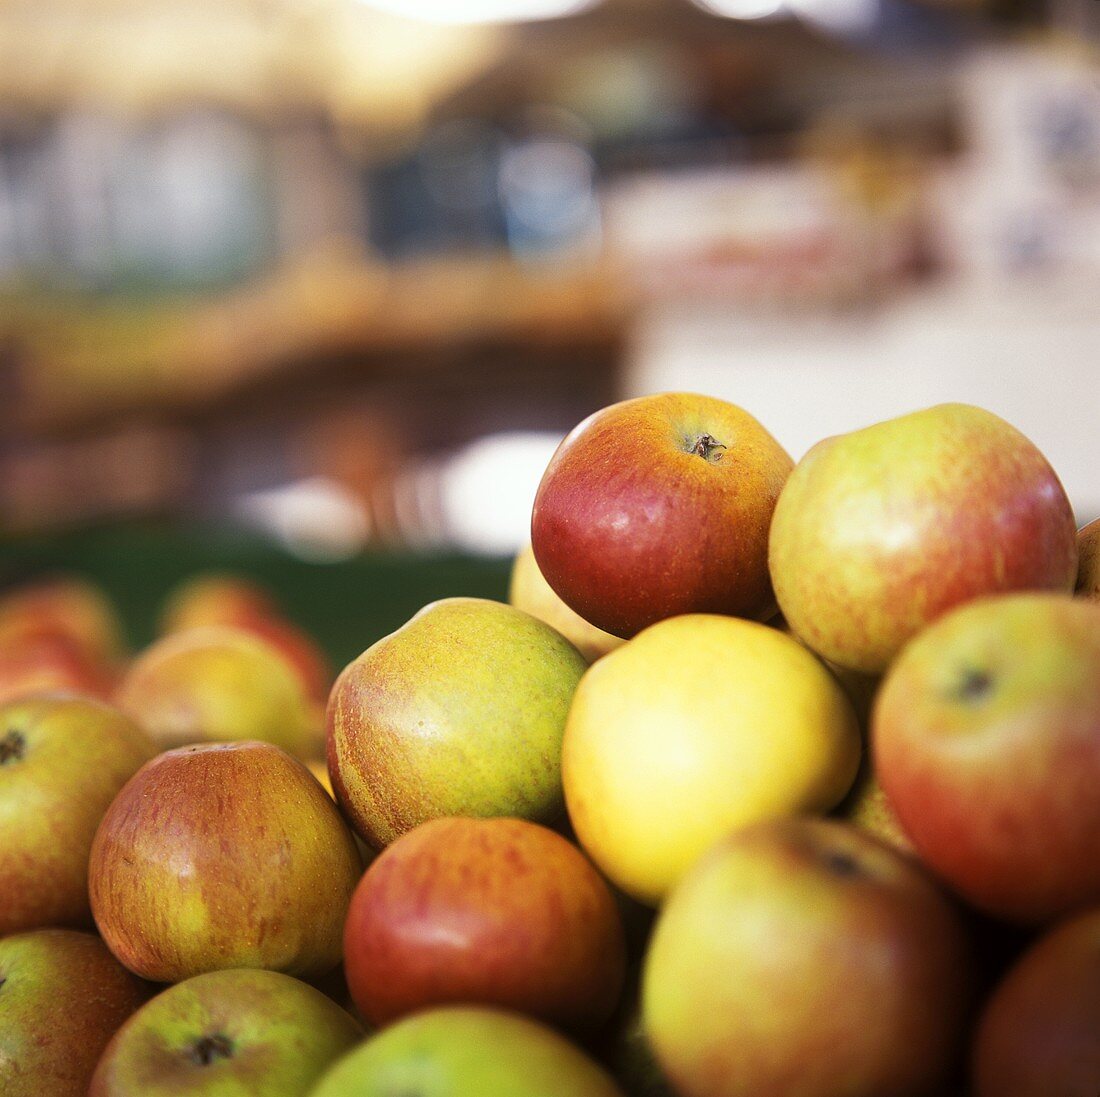 Several apples on fruit stall